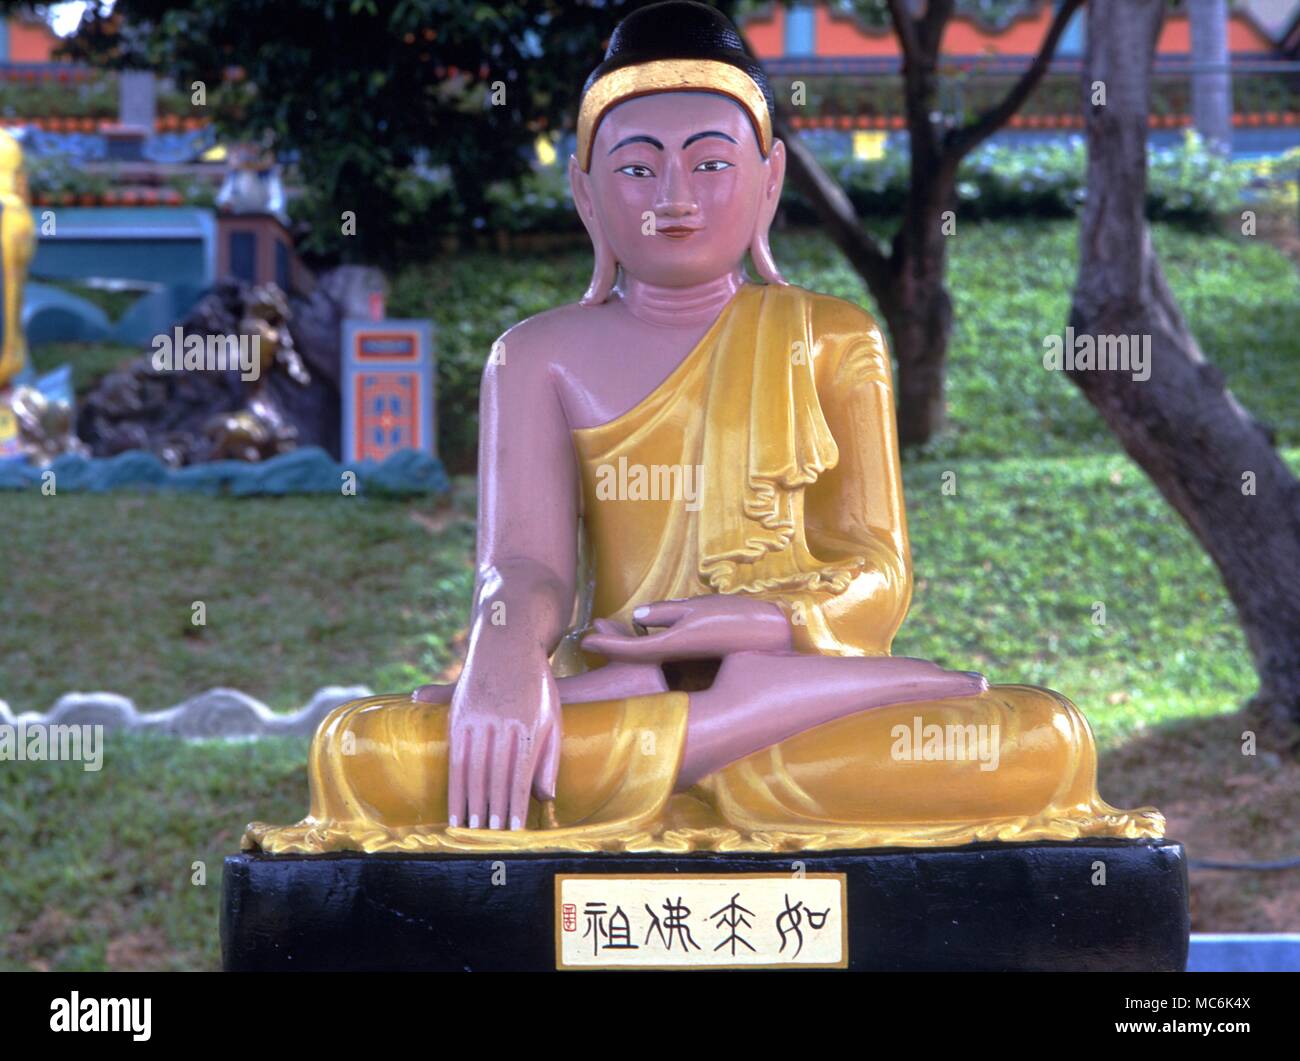 Buddha Statue of the Buddha in Haw Par Villa, Singapore Stock Photo